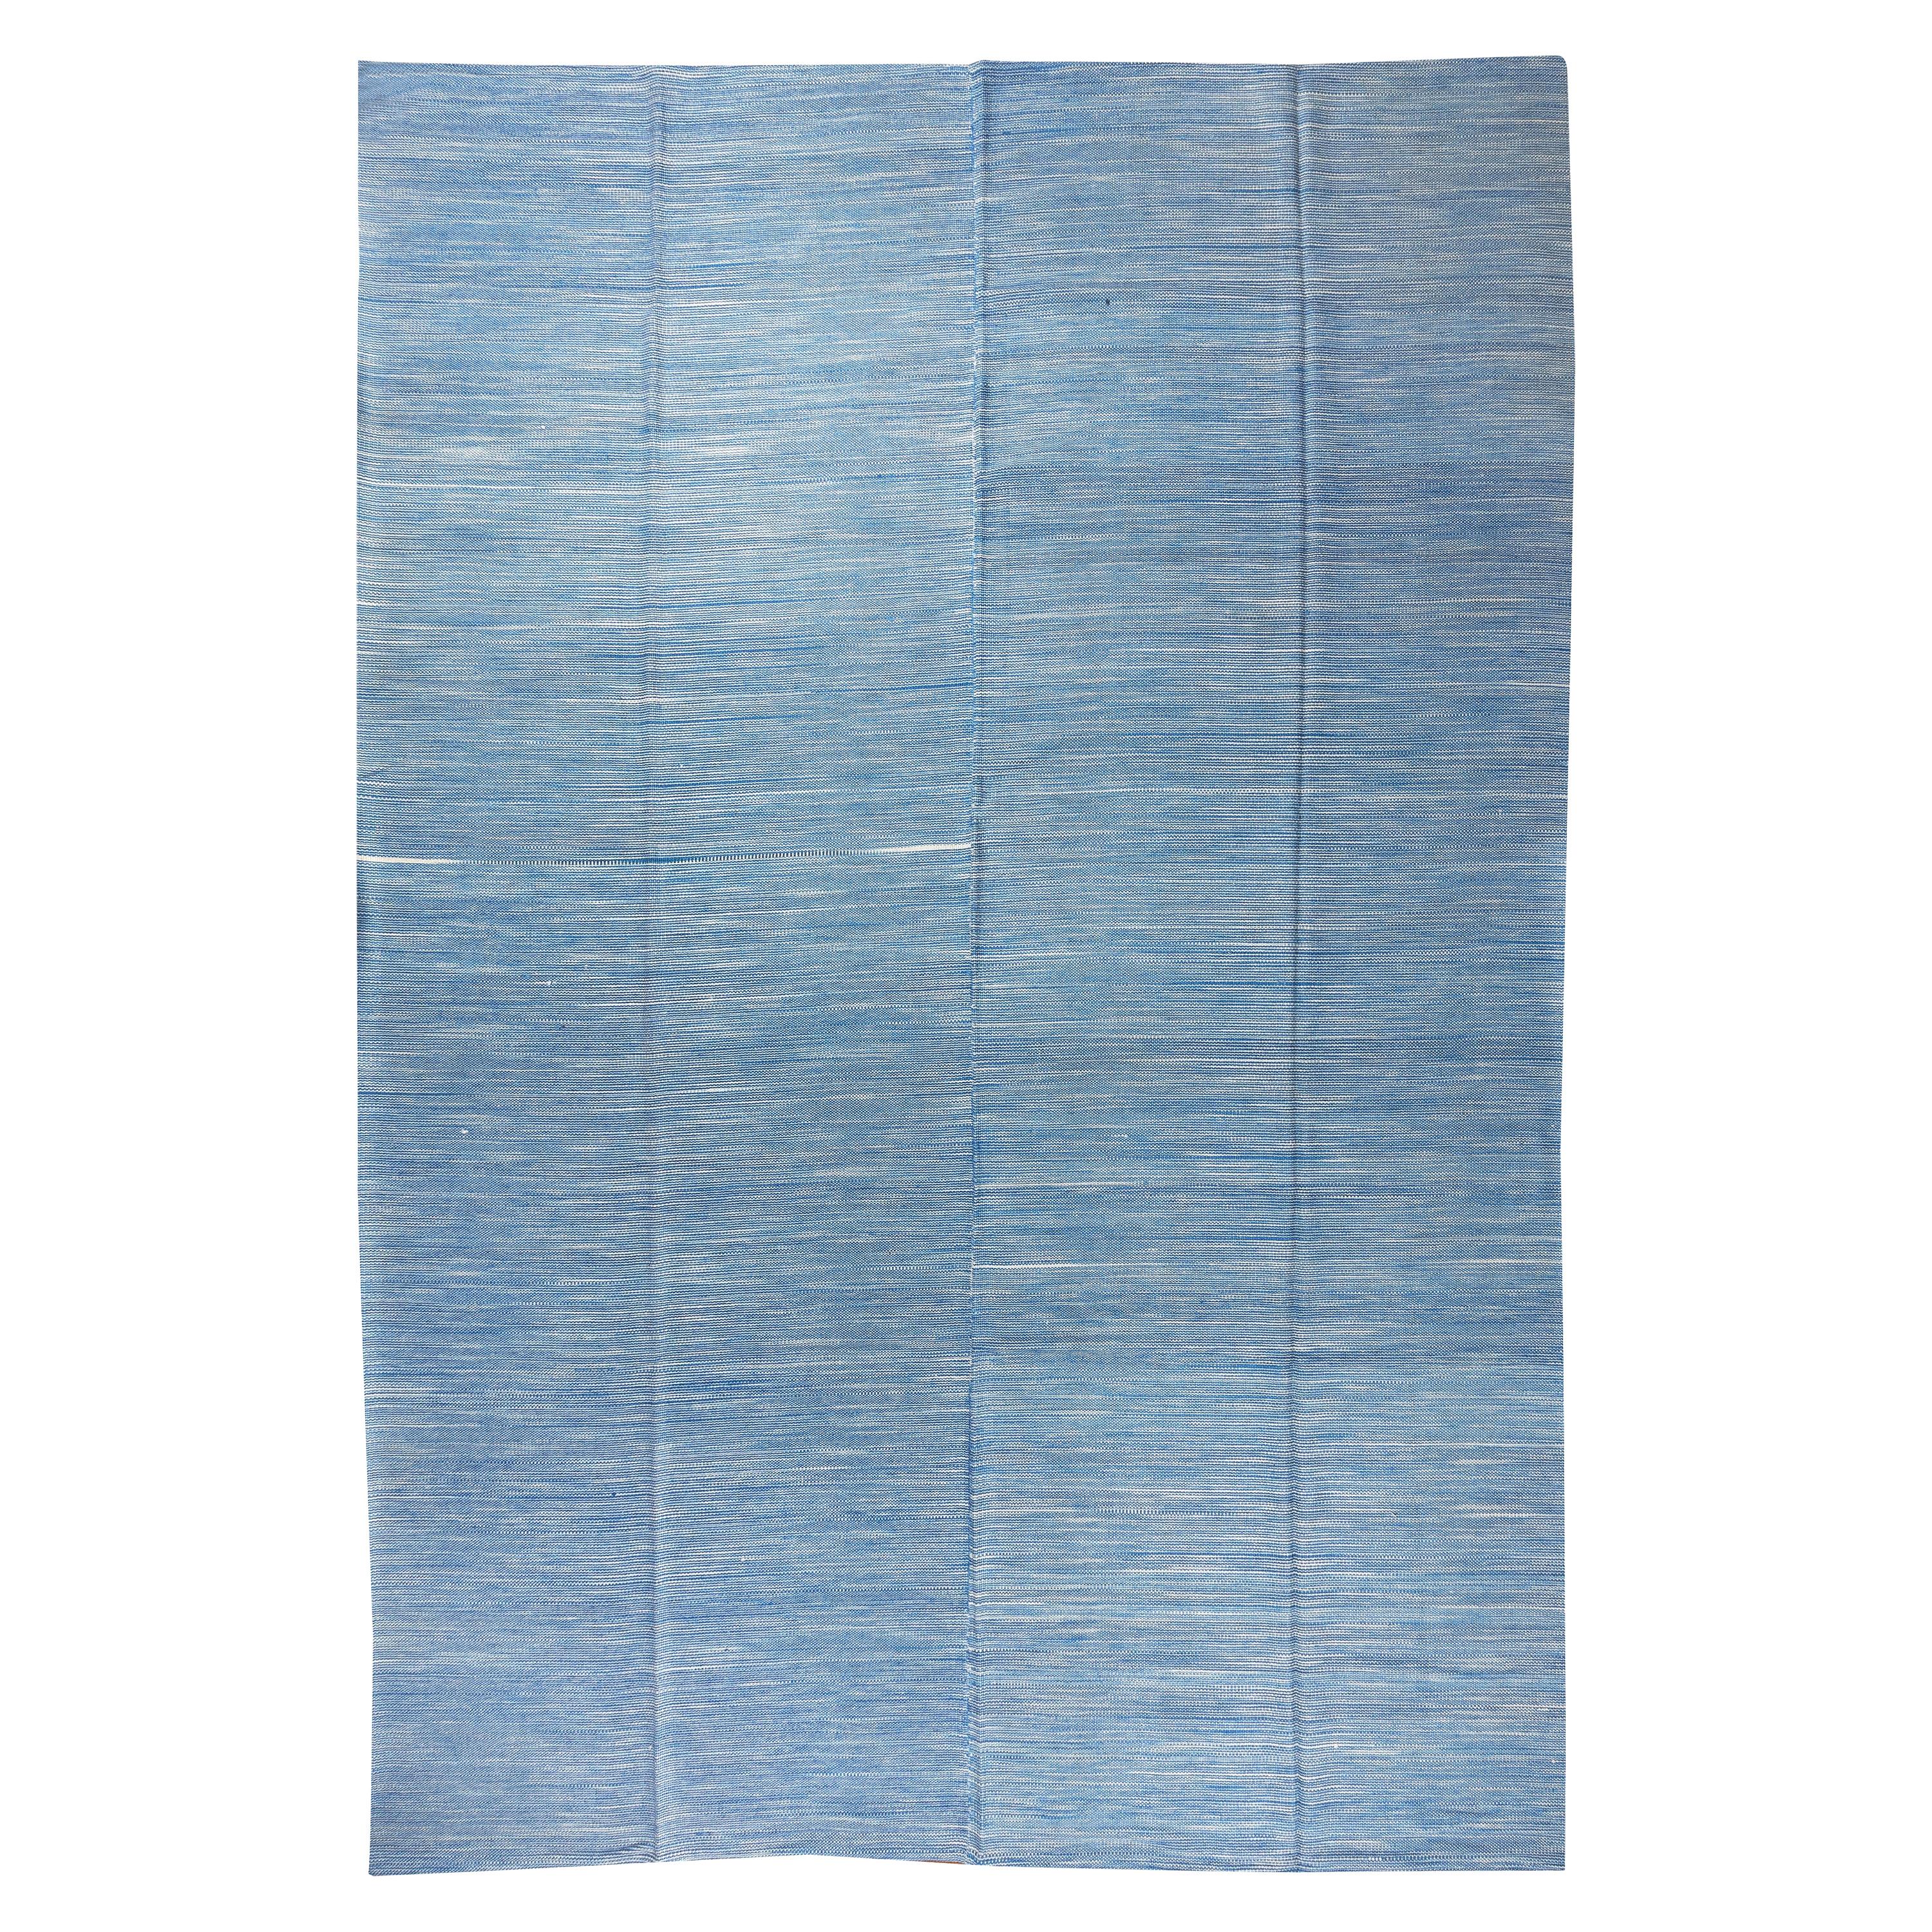 9.7x13.4 Ft Modern Anatolian Double Sided Kilim Rug, Light Blue Wool Carpet